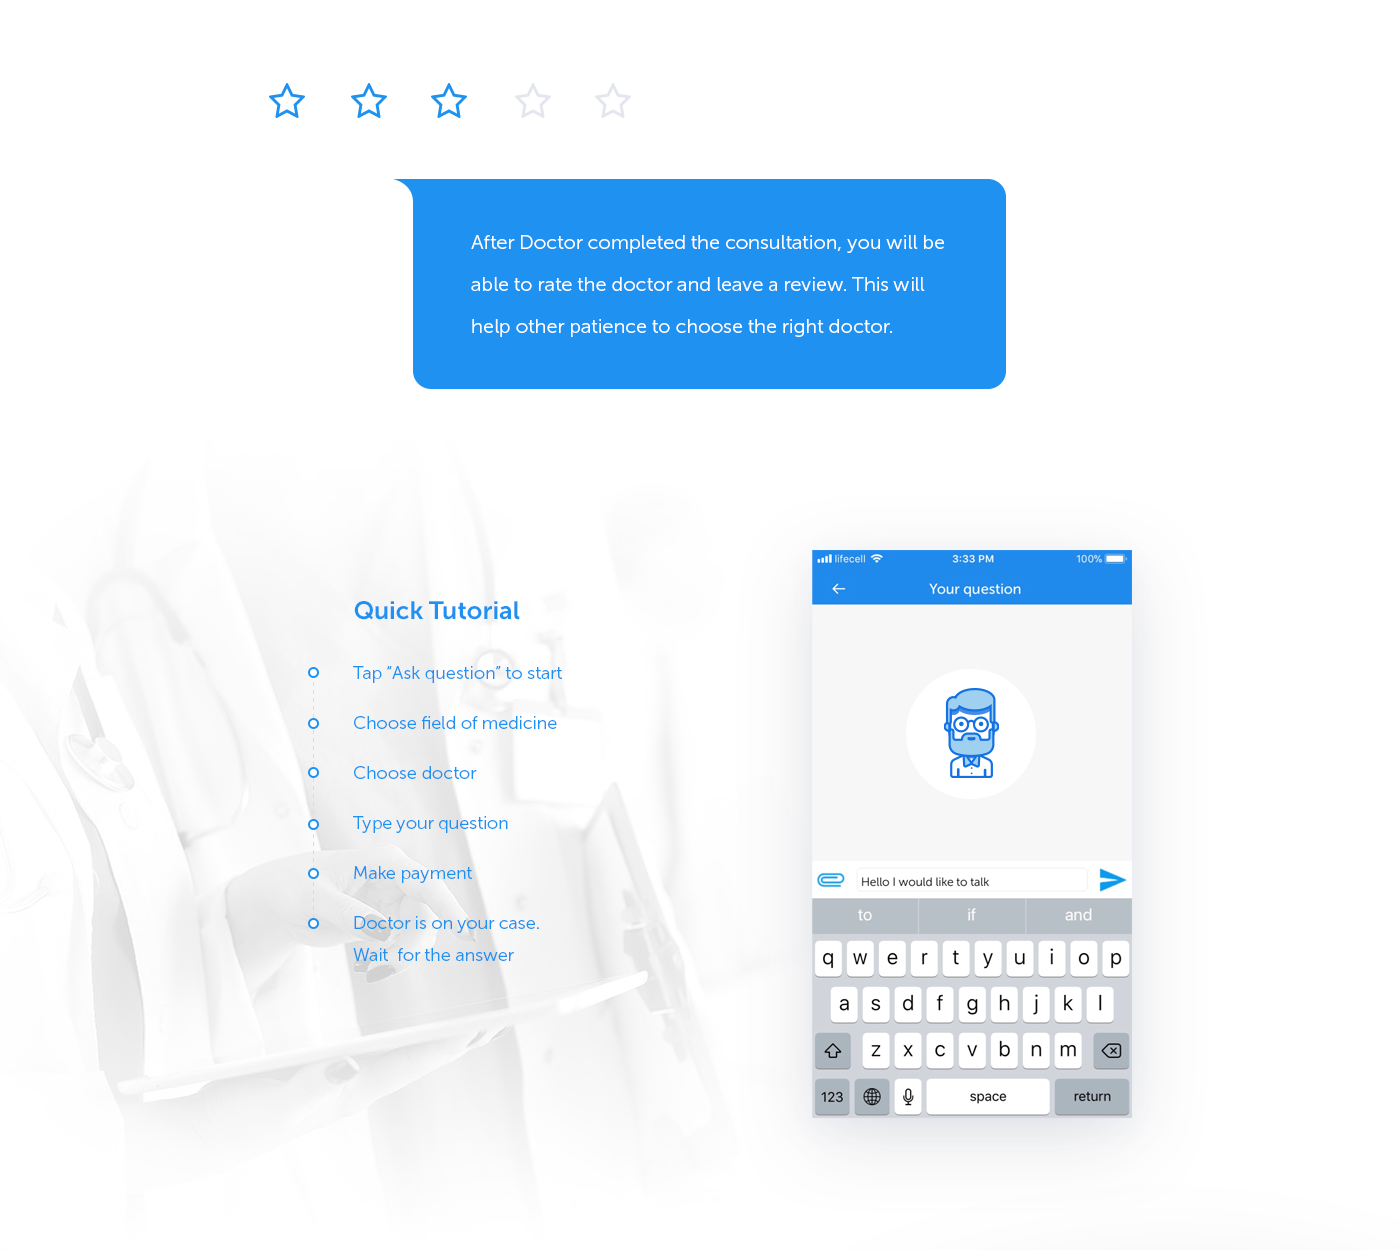 mobile Web medical doctor design Developing ideus app UI